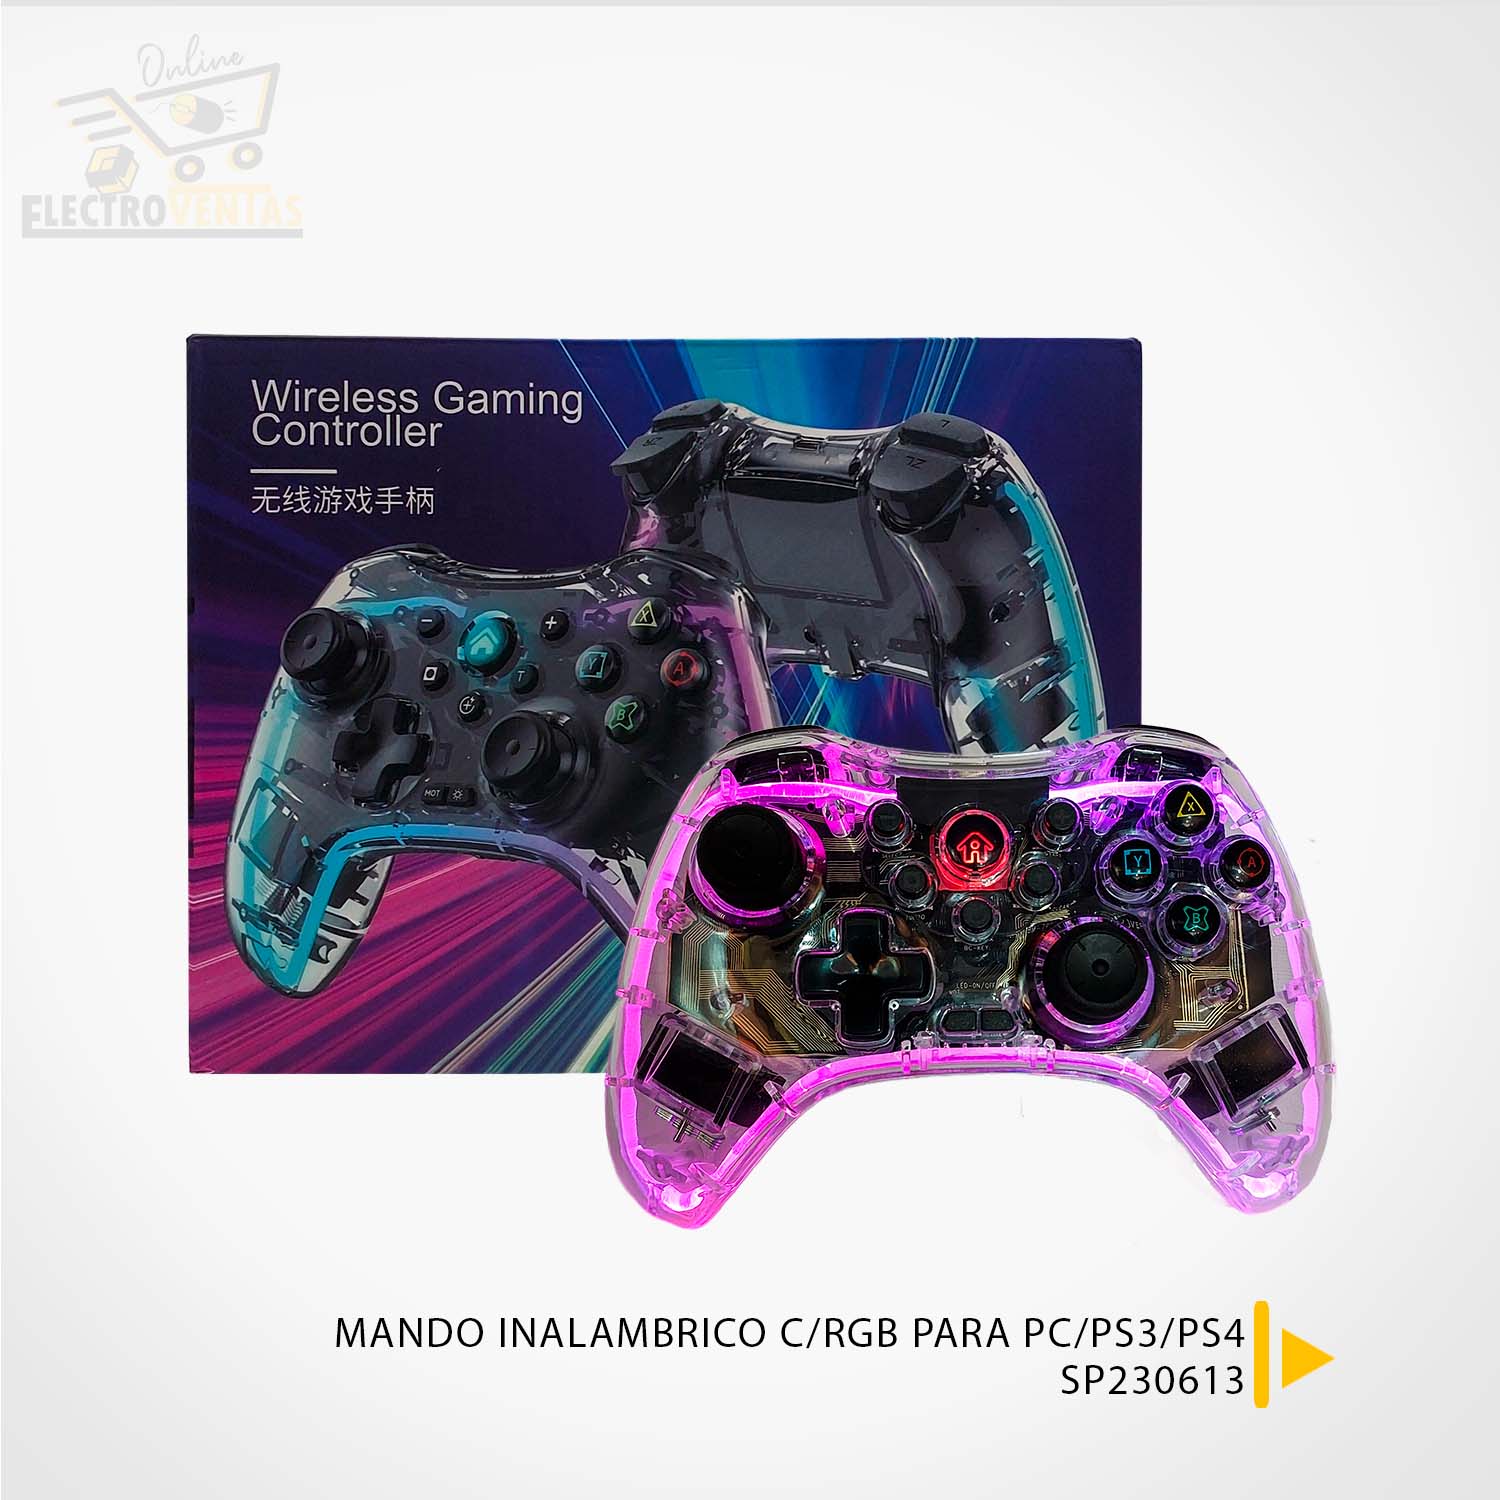 SP230613” MANDO INALAMBRICO C/RGB PARA PC/PS3/PS4 – VENTAS POR